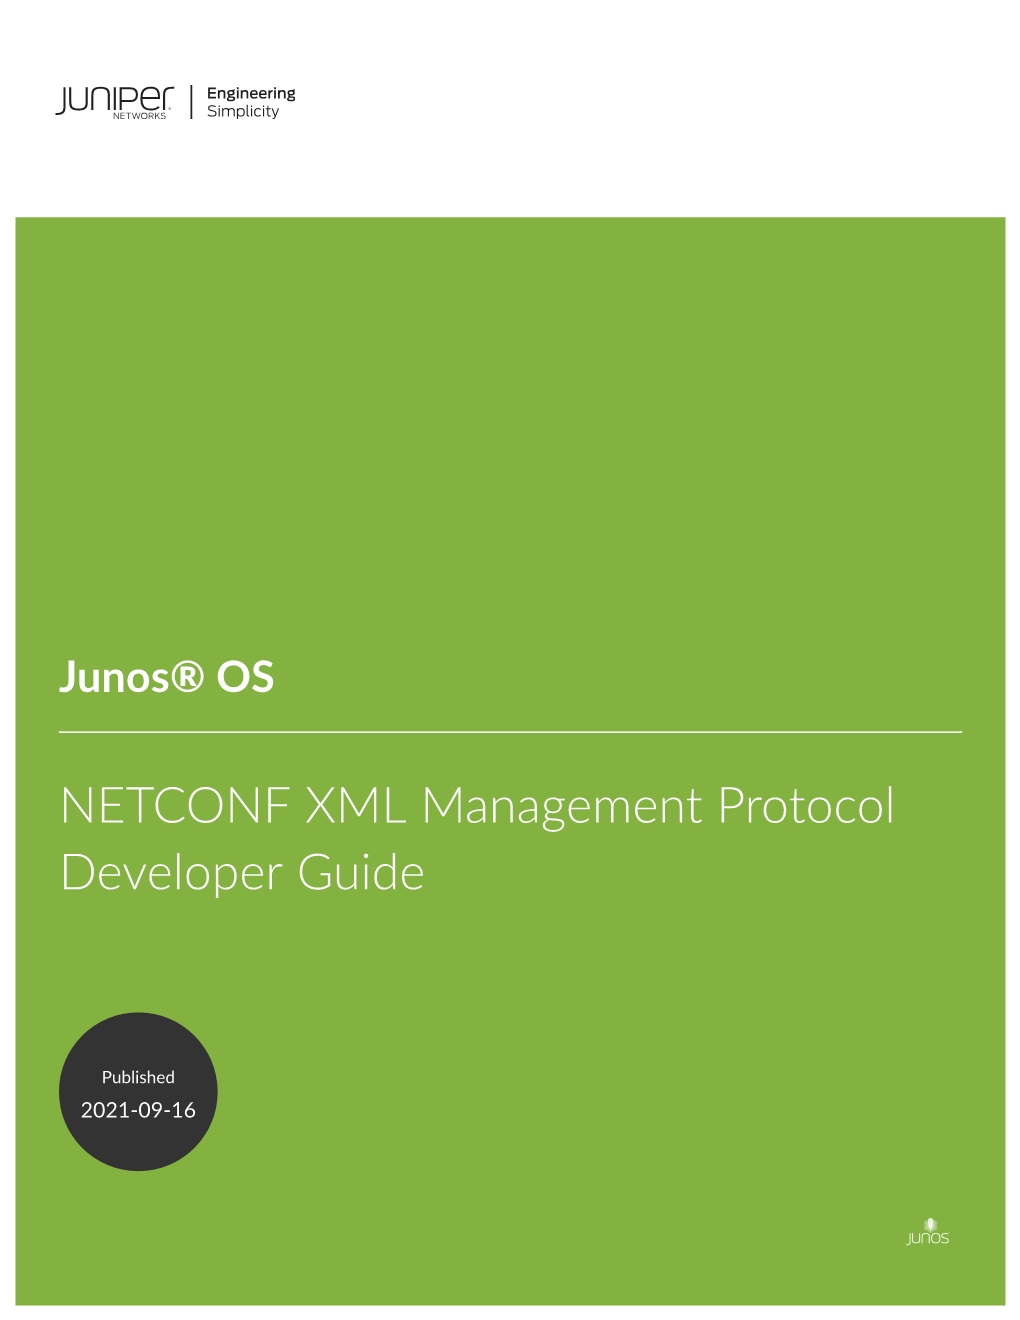 NETCONF XML Management Protocol Developer Guide